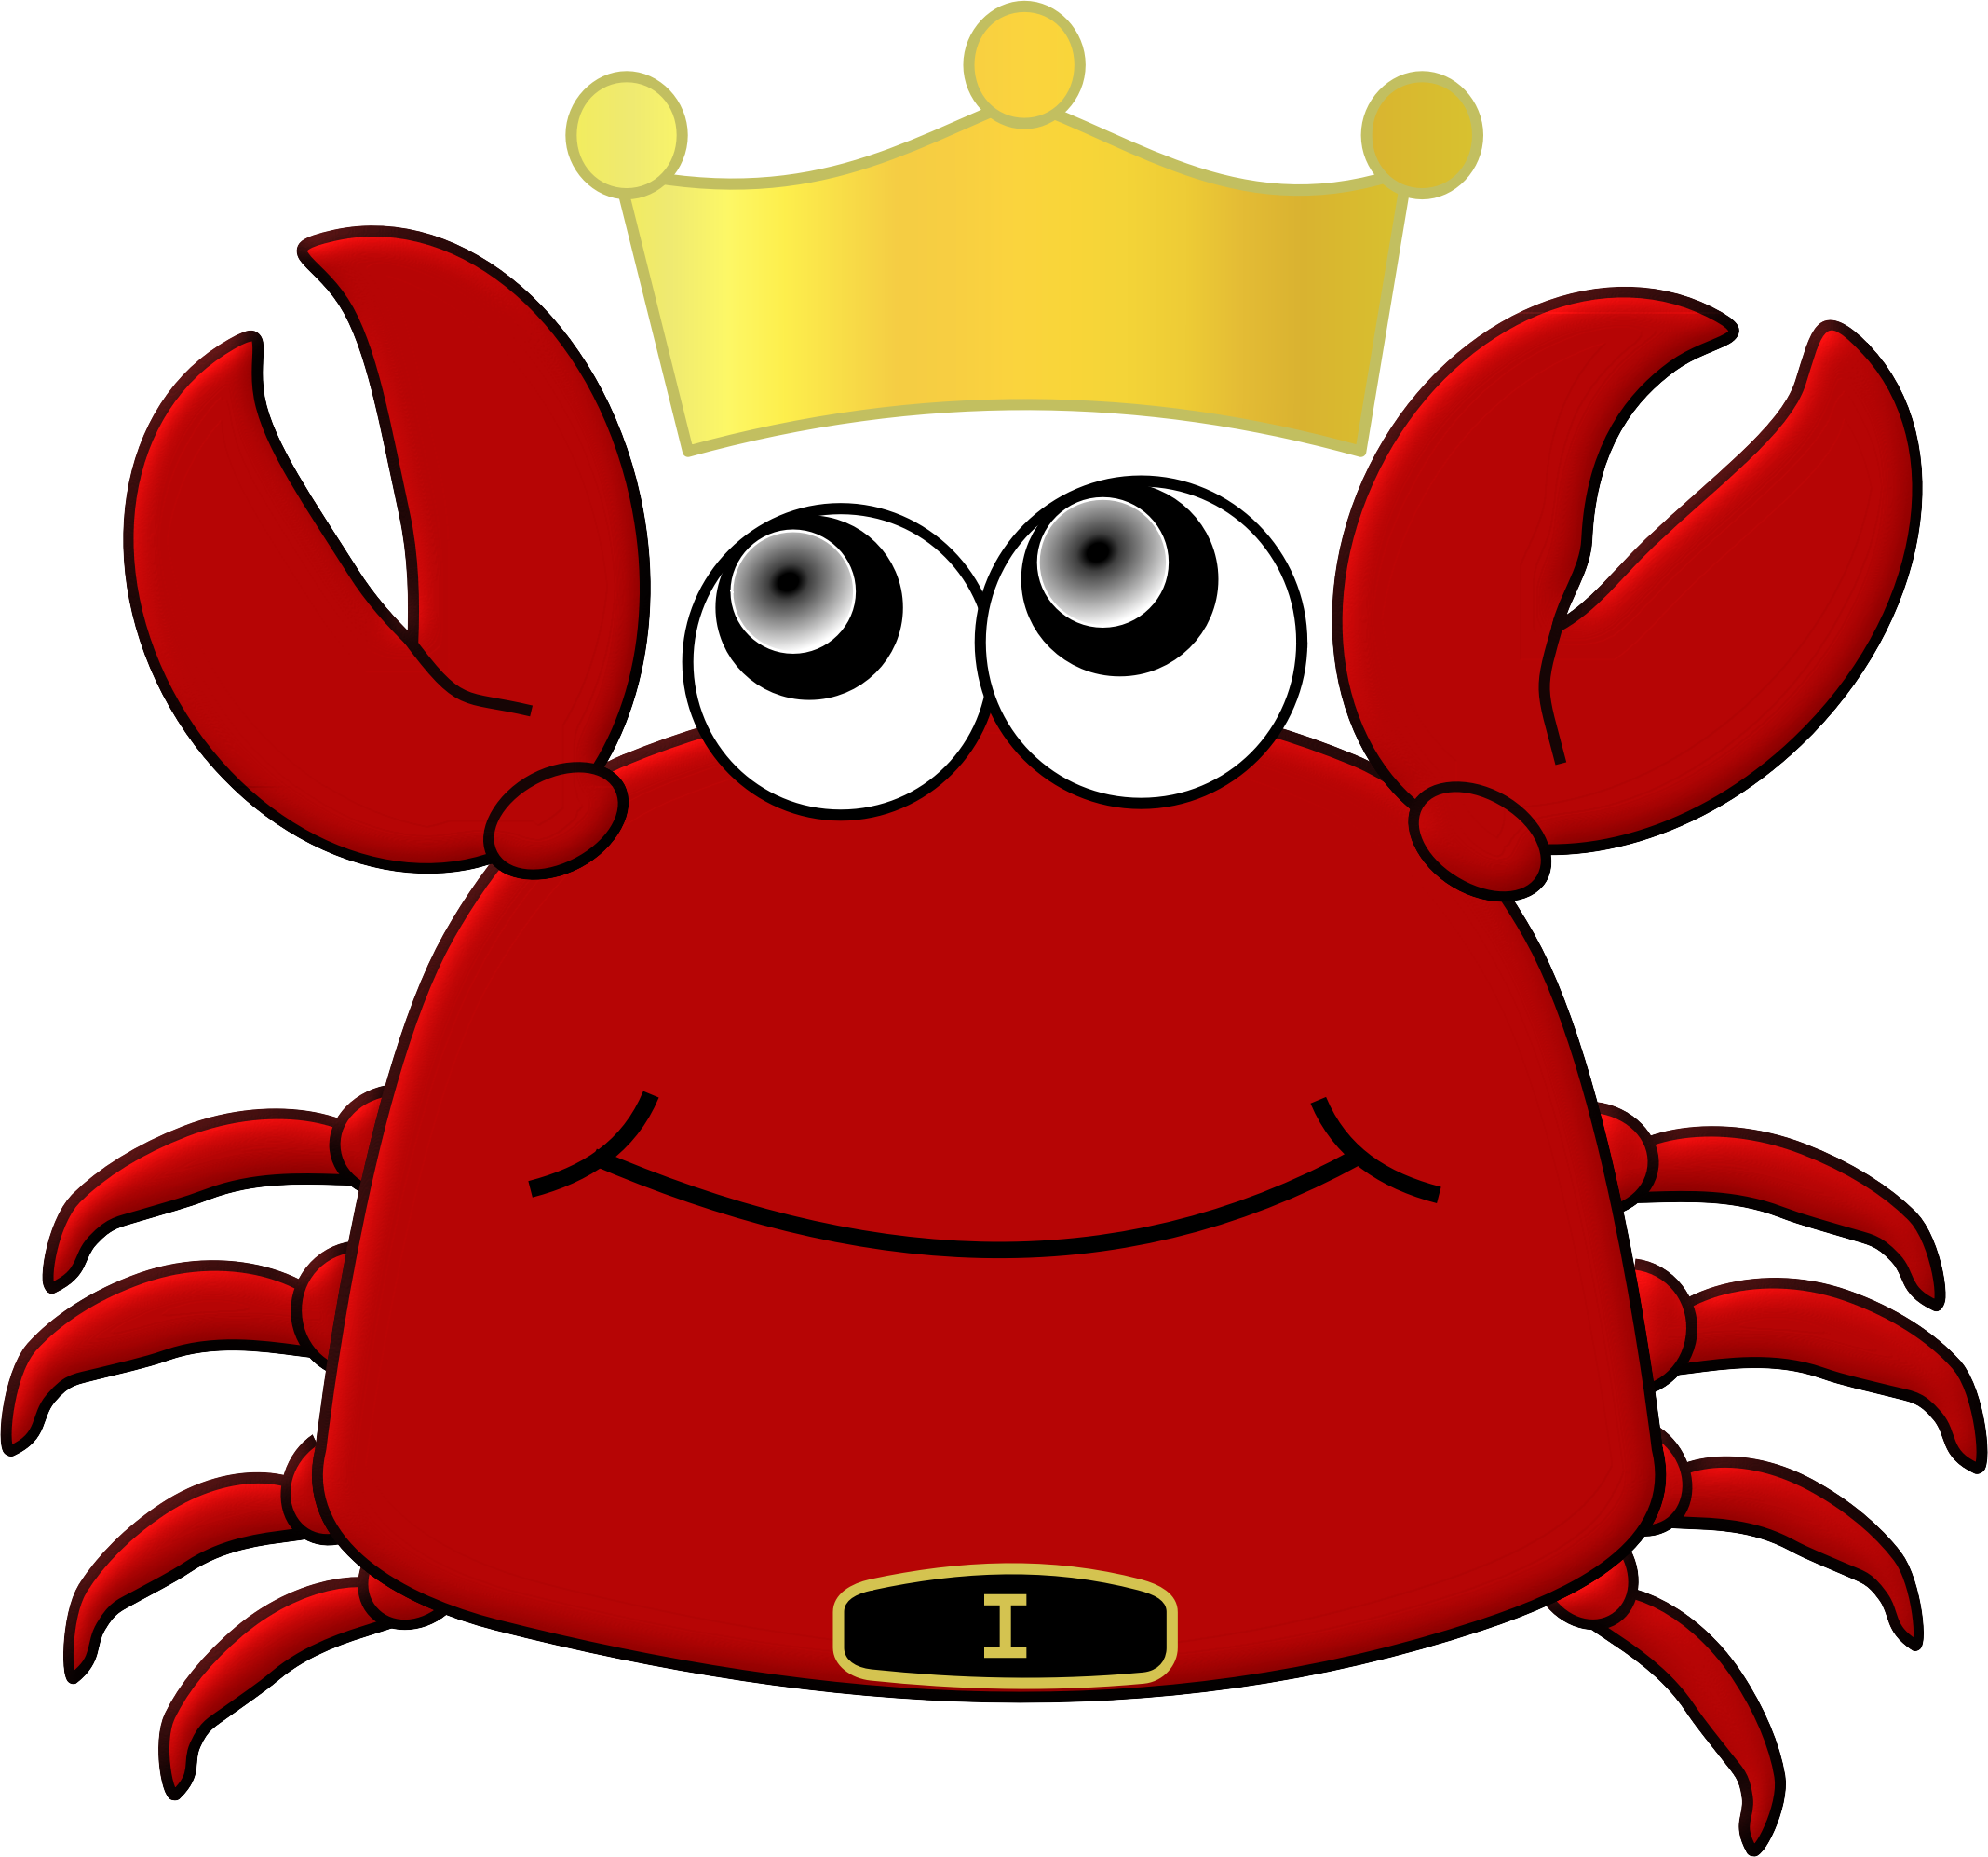 Download King Crab Cartoon vector files image - Free stock photo - Public Domain photo - CC0 Images